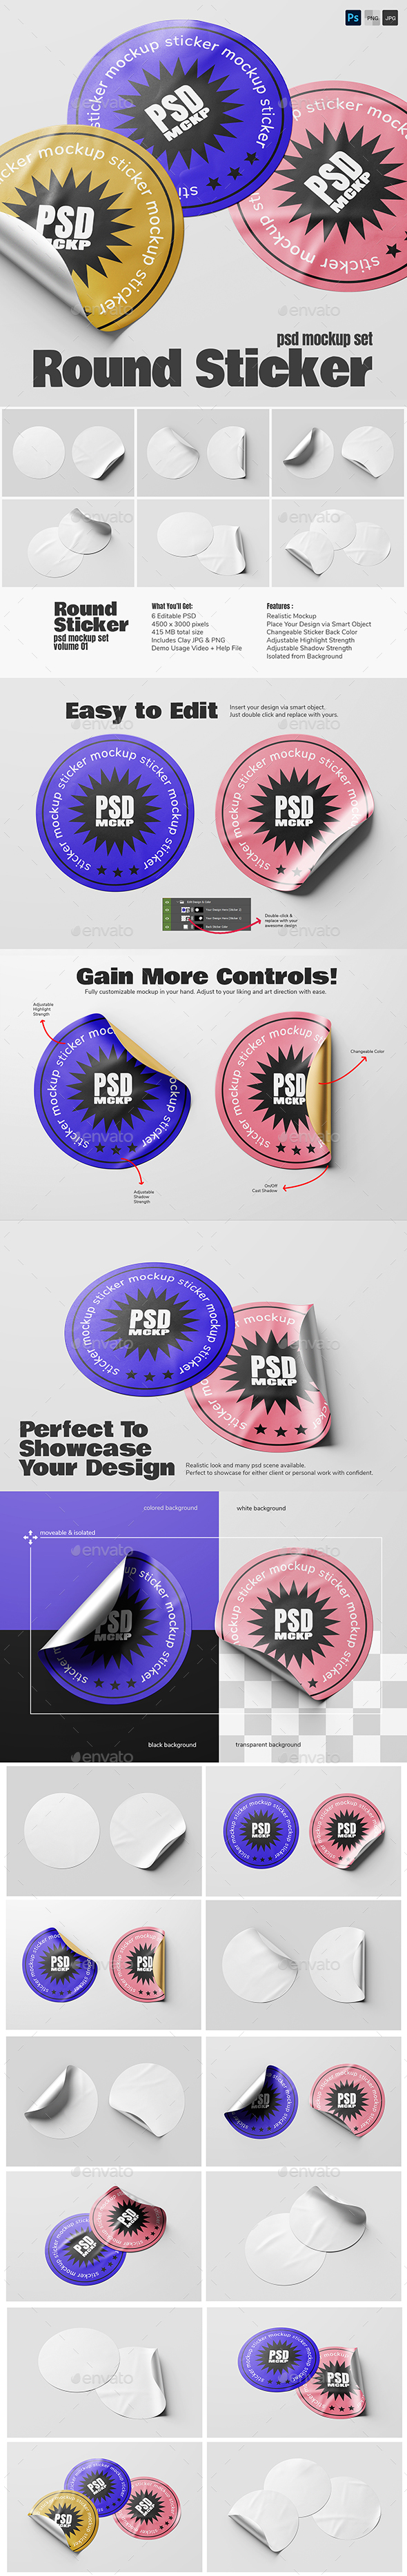 Round Sticker Label PSD Mockup Set - Vol. 01